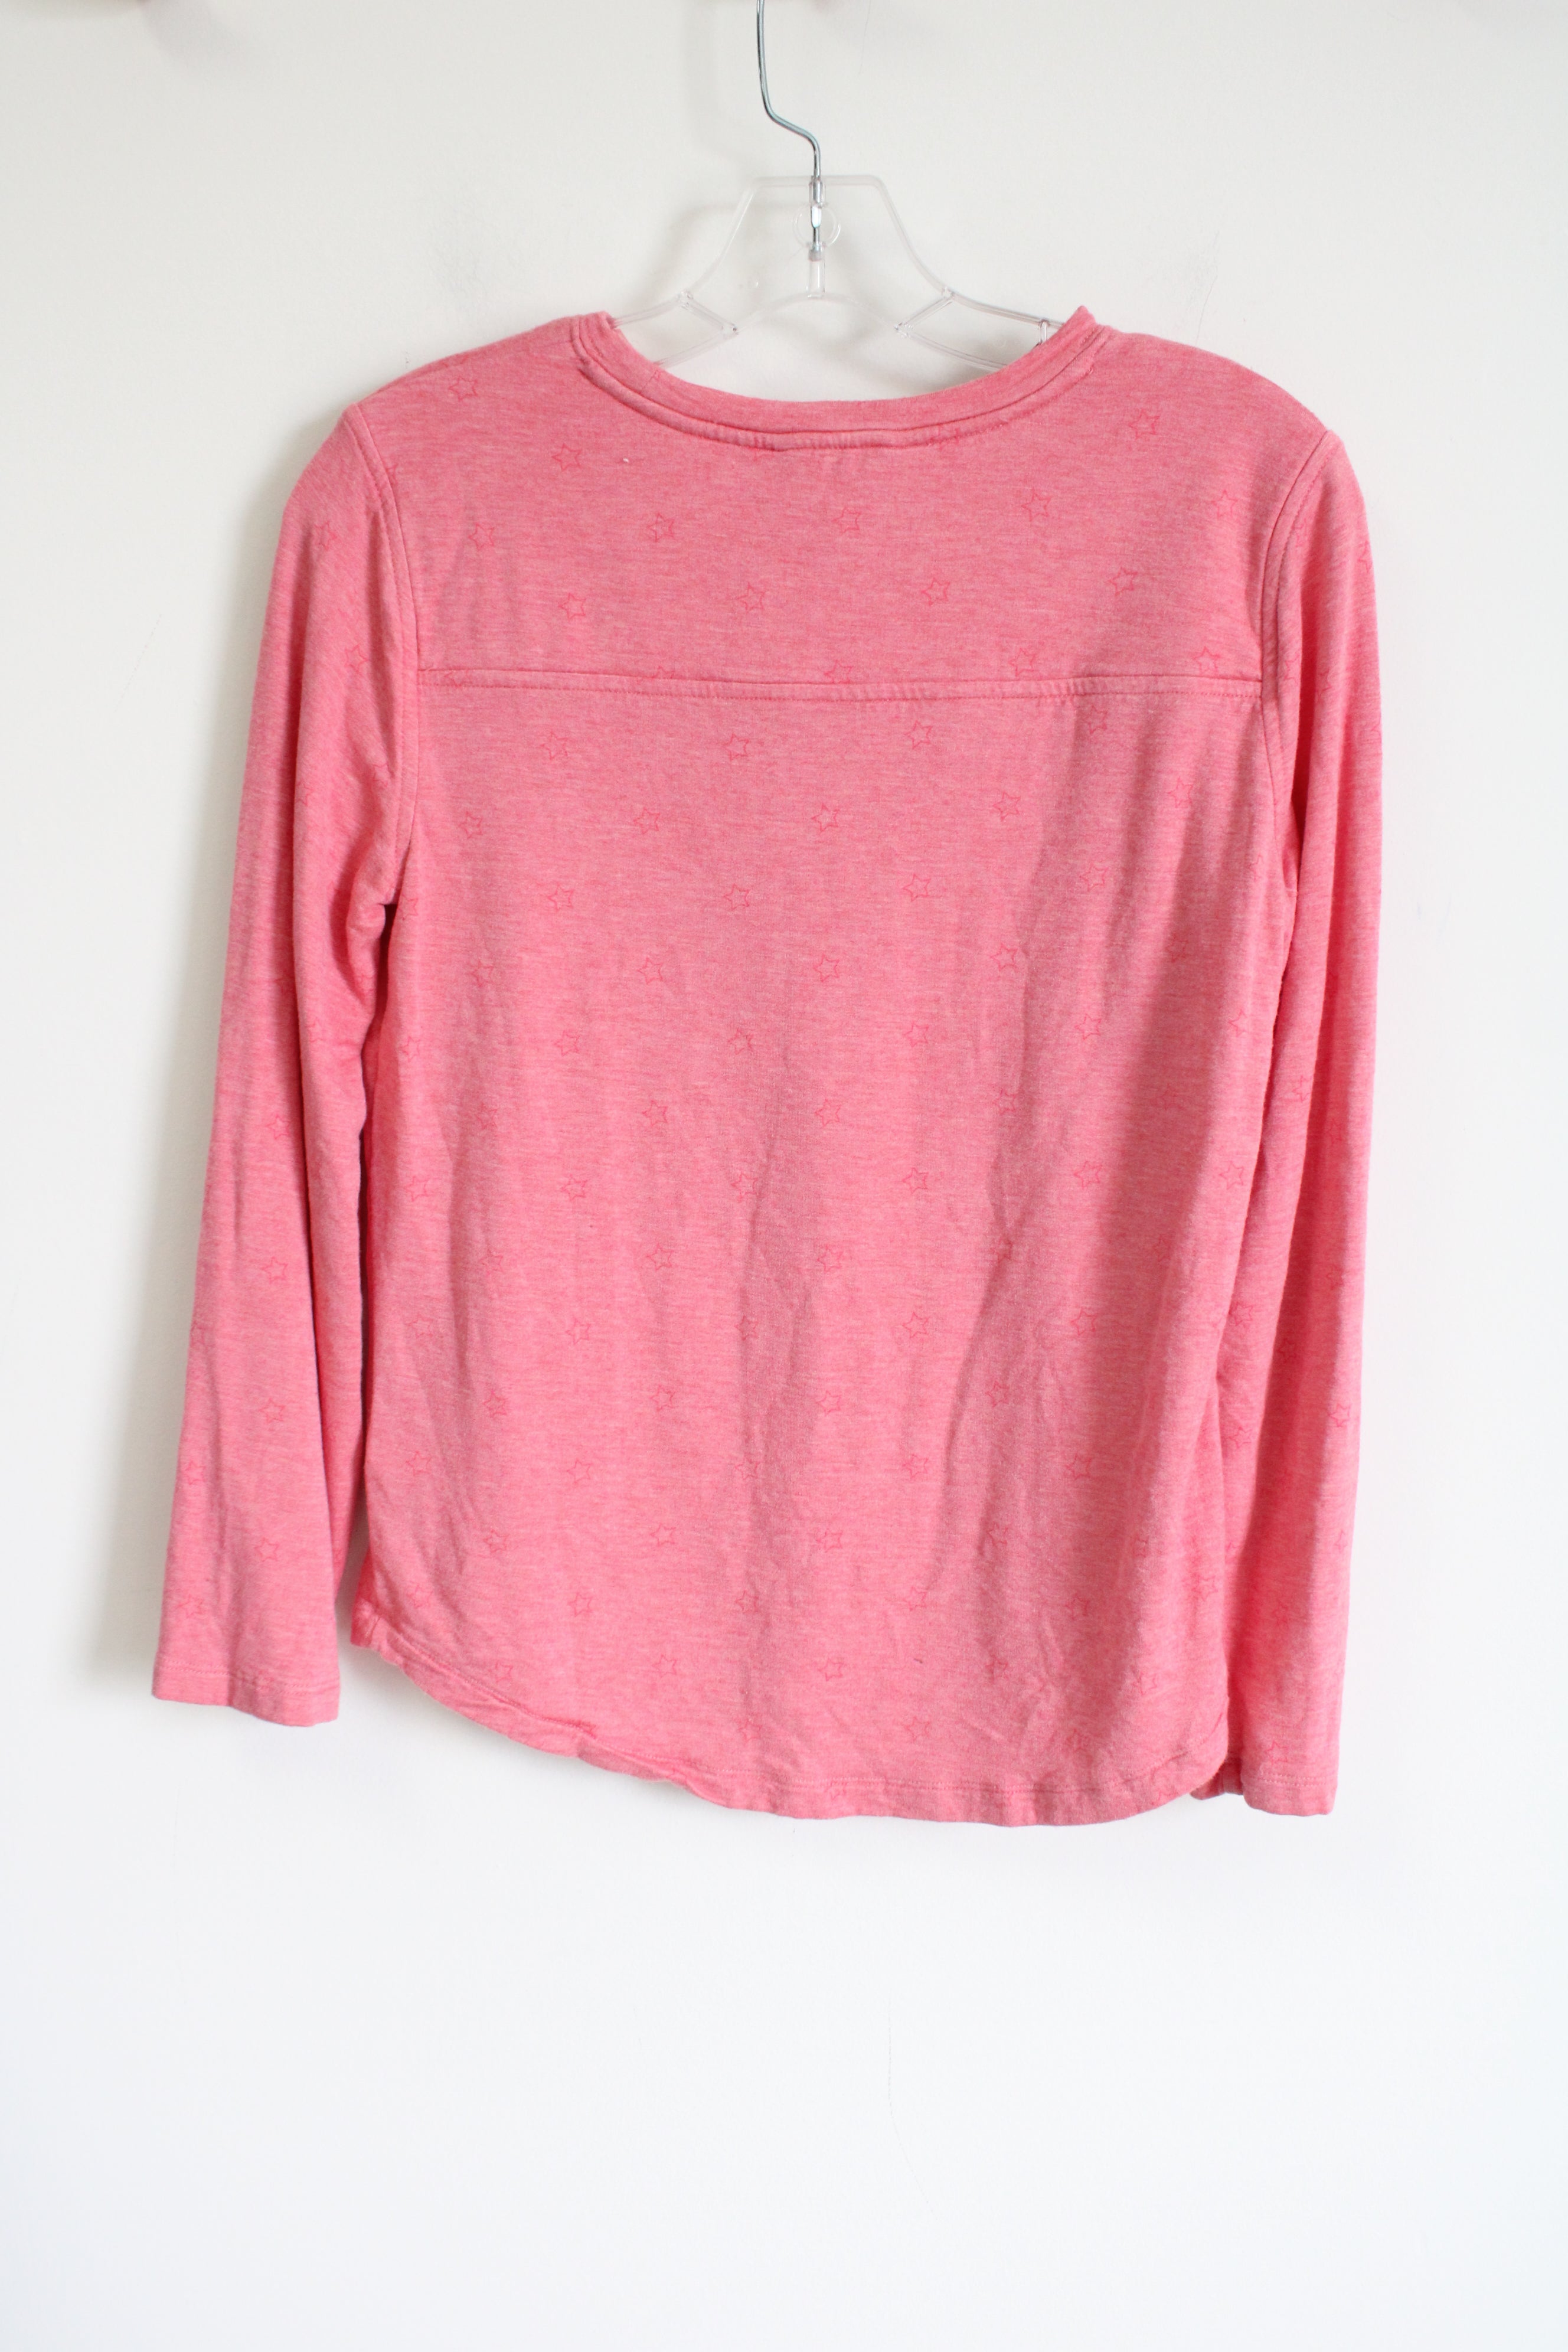 Vineyard Vines Pink Long Sleeved Shirt | Youth L (14)